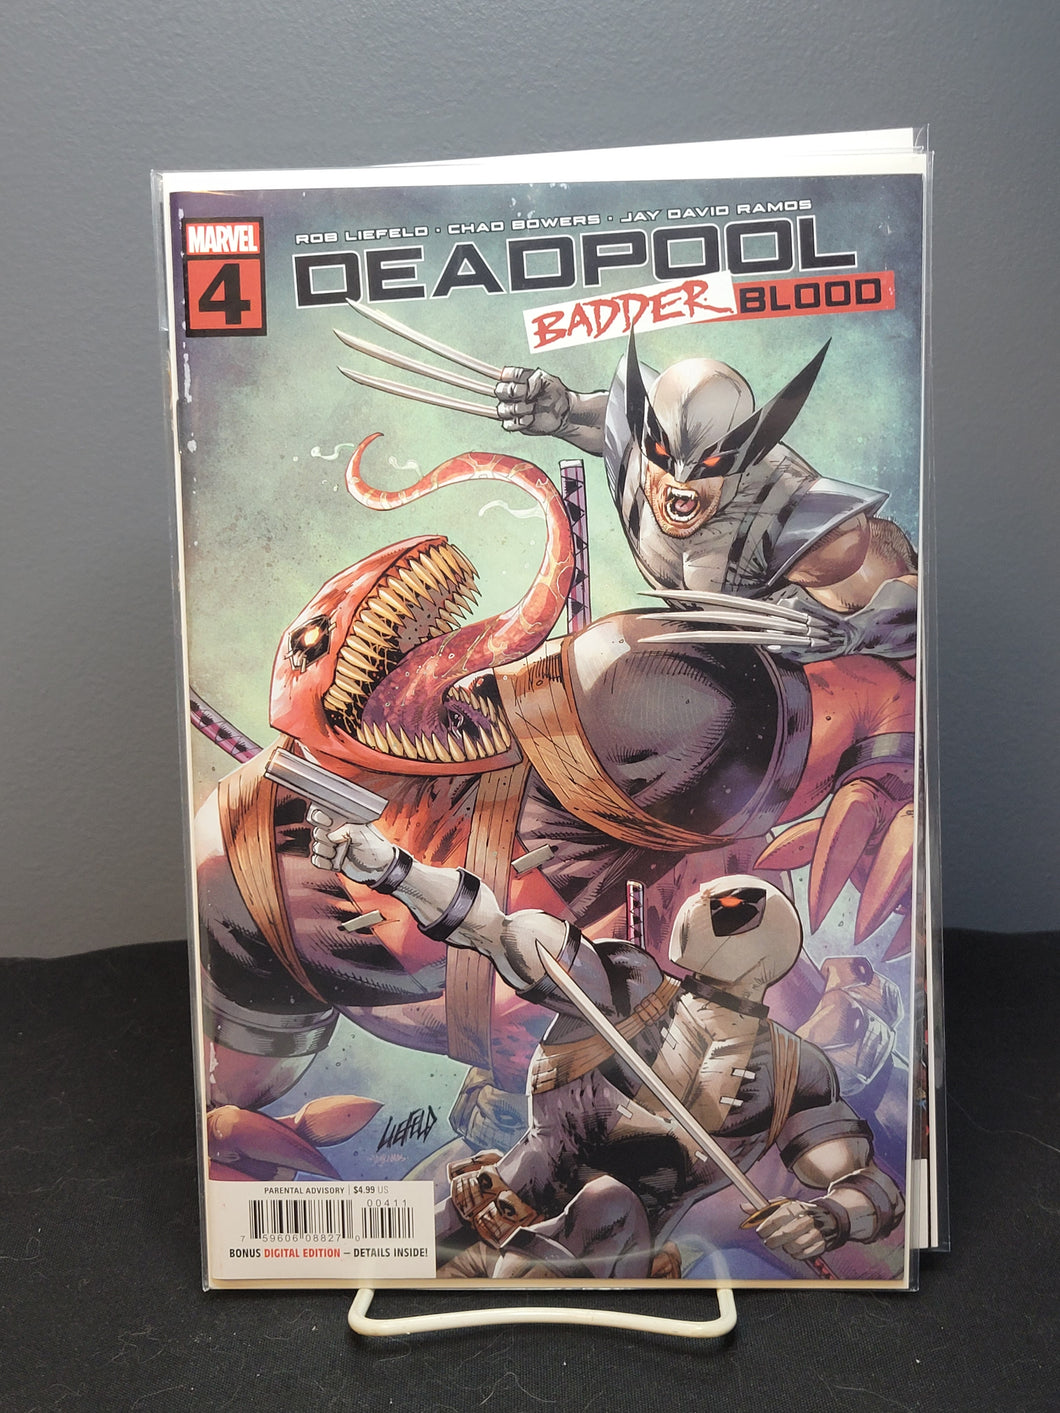 Deadpool Badder Blood #4